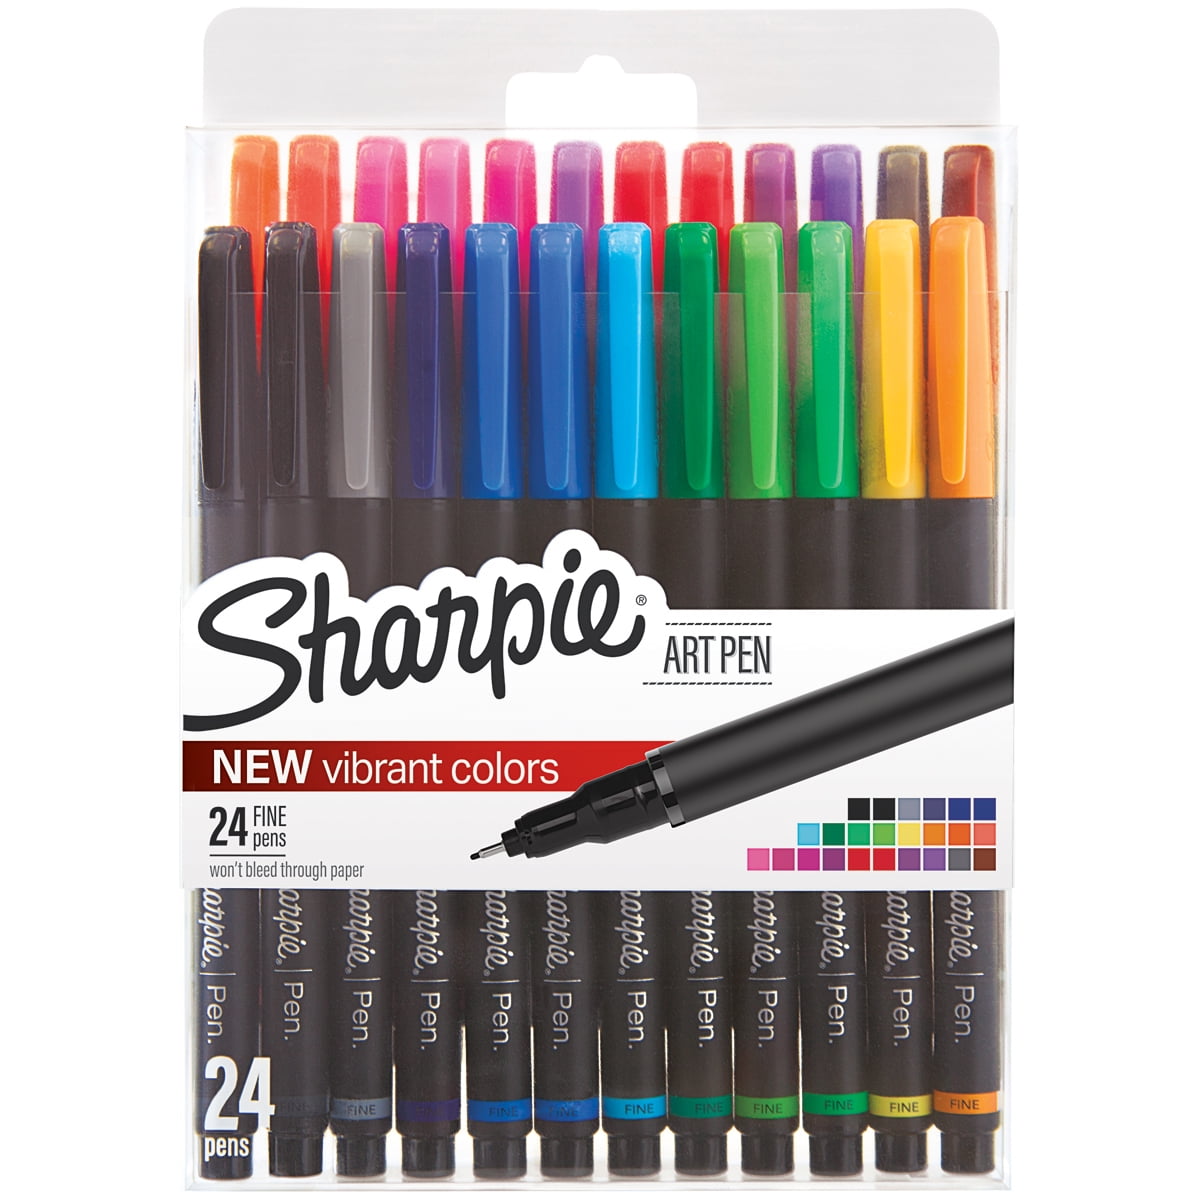 Sharpie Art Pens, Fine Point, Assorted Colors, Hard Case, 12 Pack (1982057)